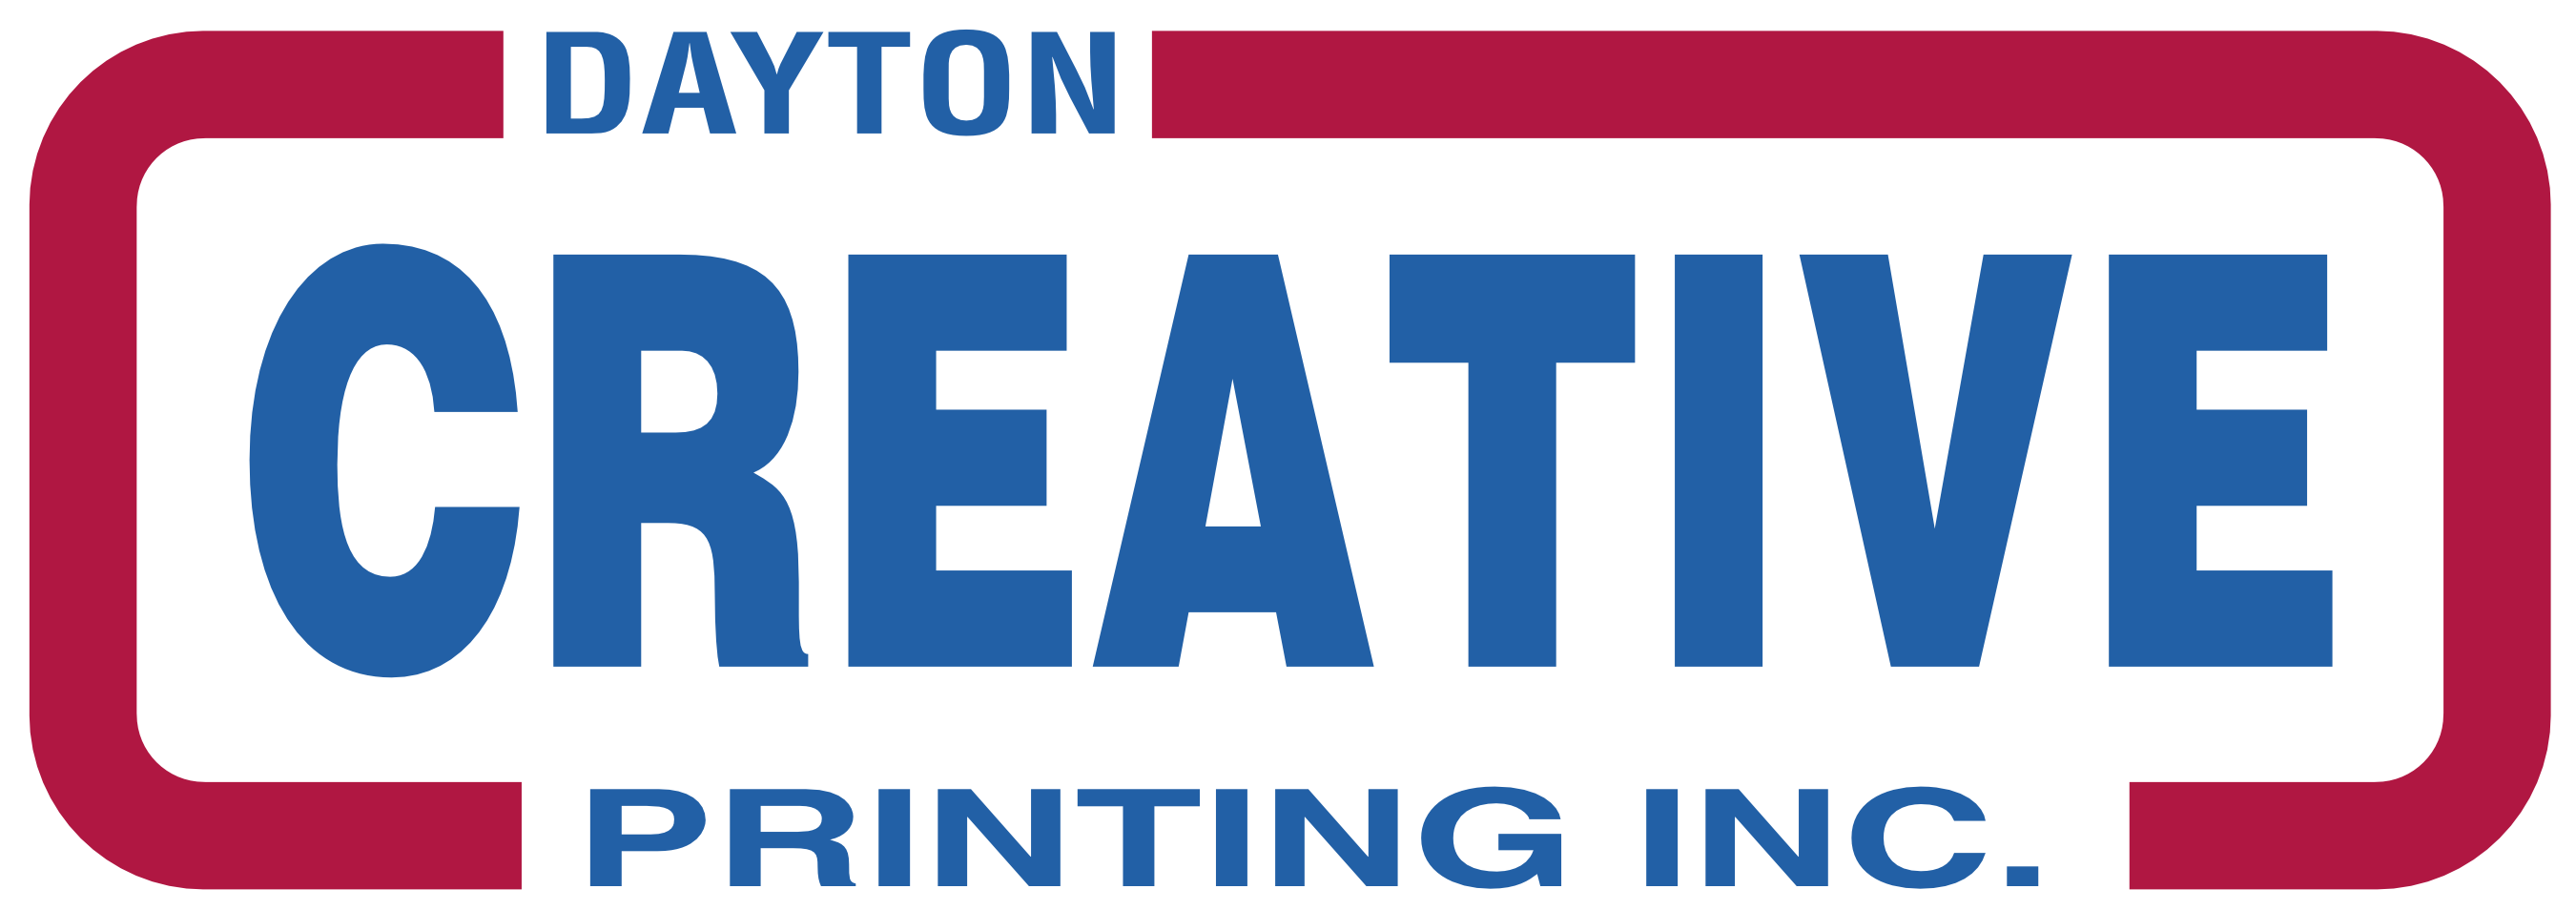 Dayton Creative Printing Inc.